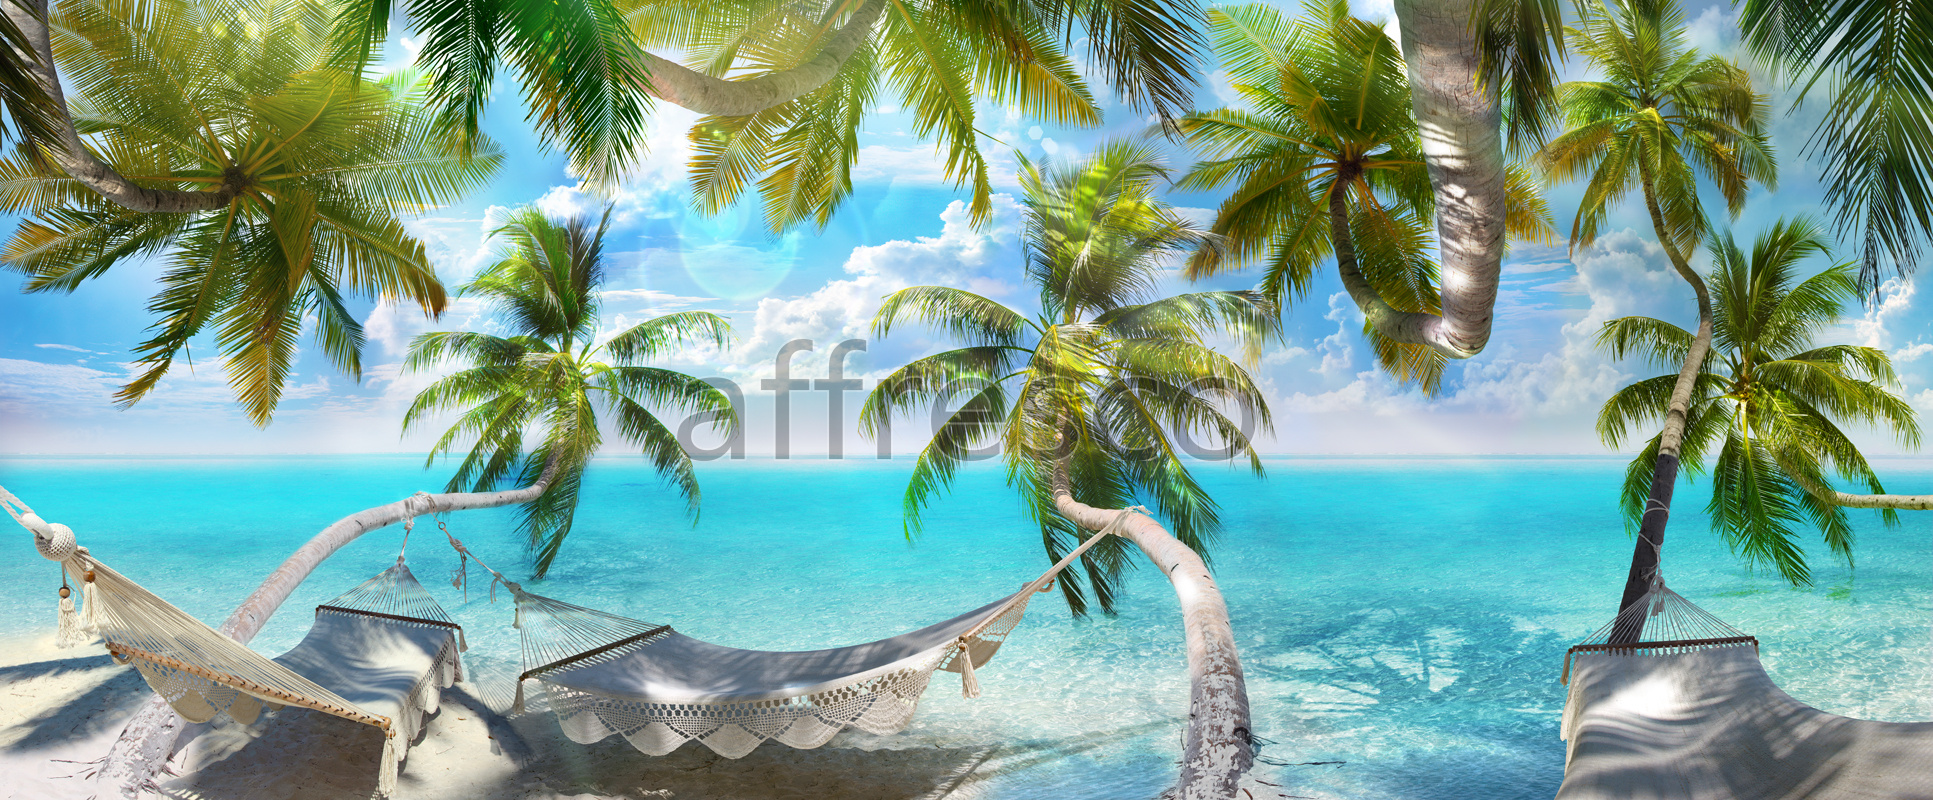 6347 | The best landscapes | hammocks on palms | Affresco Factory